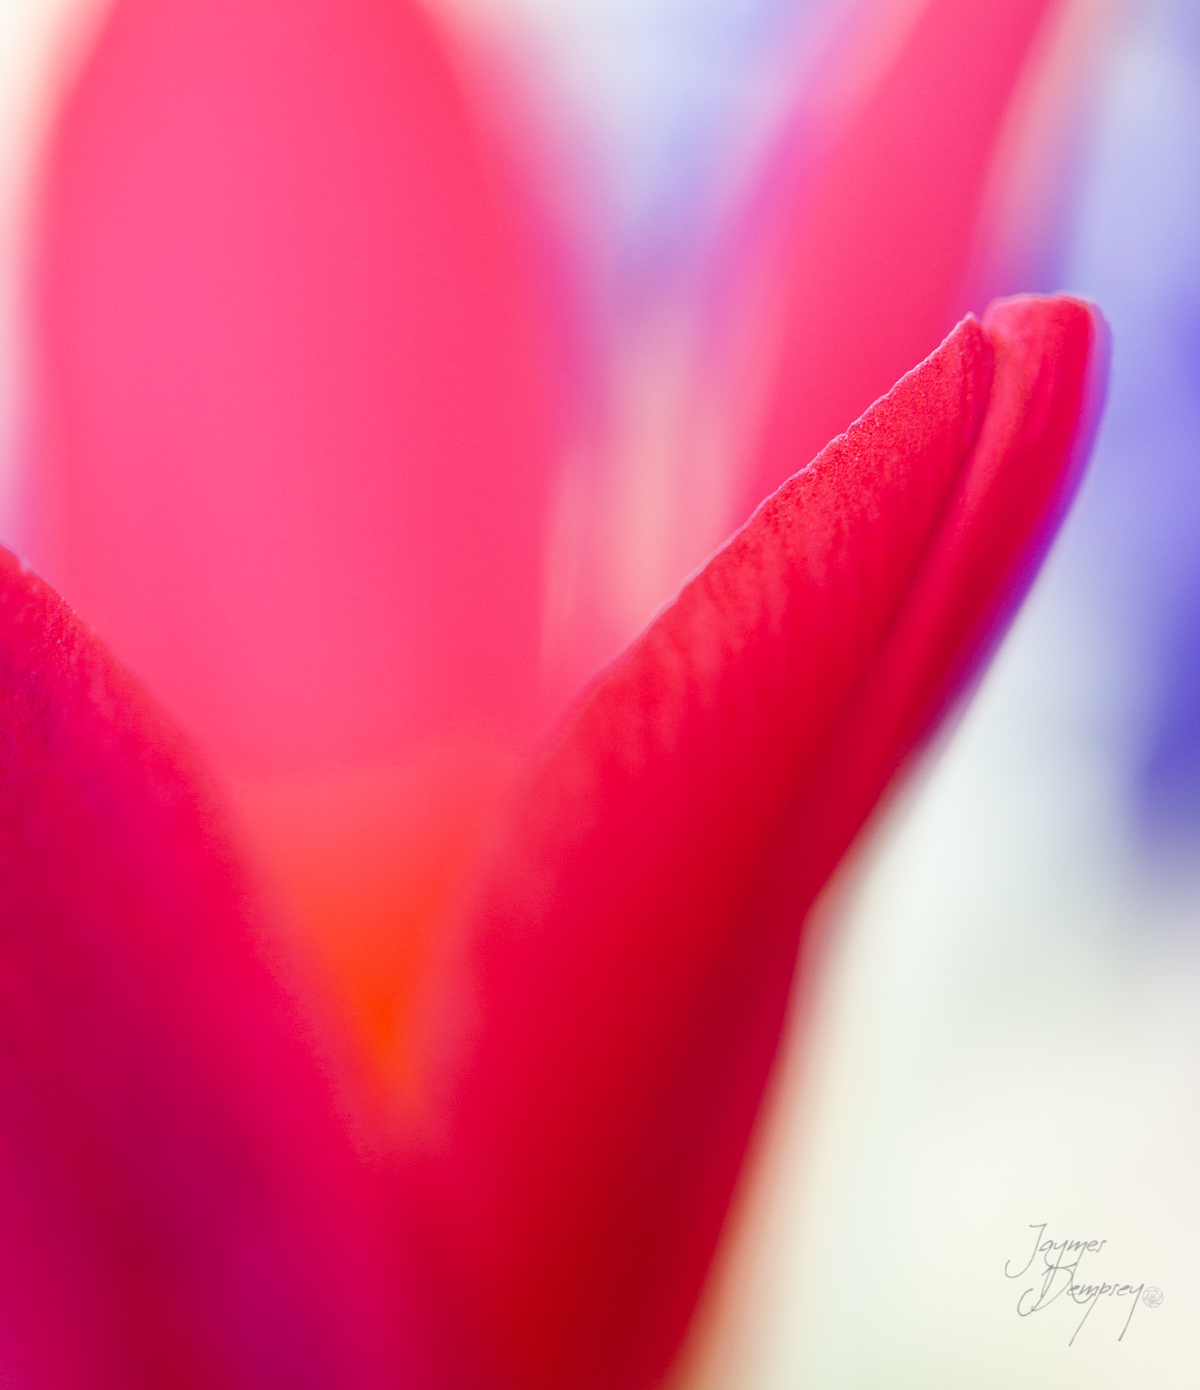 Flower soft focus macro by Jaymes Dempsey ©